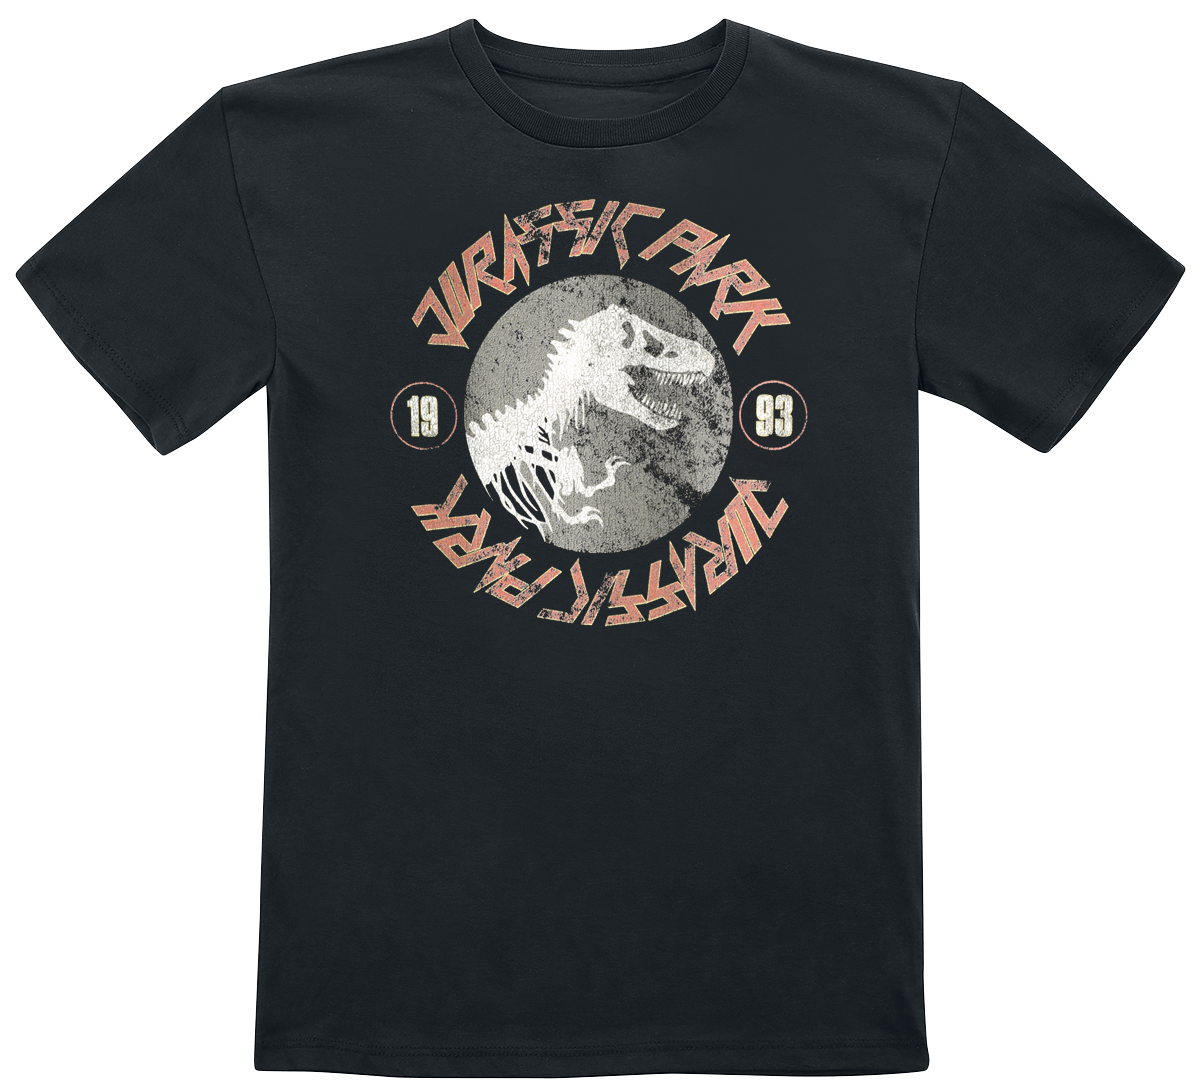 Jurassic Park - Kids - 1993 - T-Shirt - schwarz